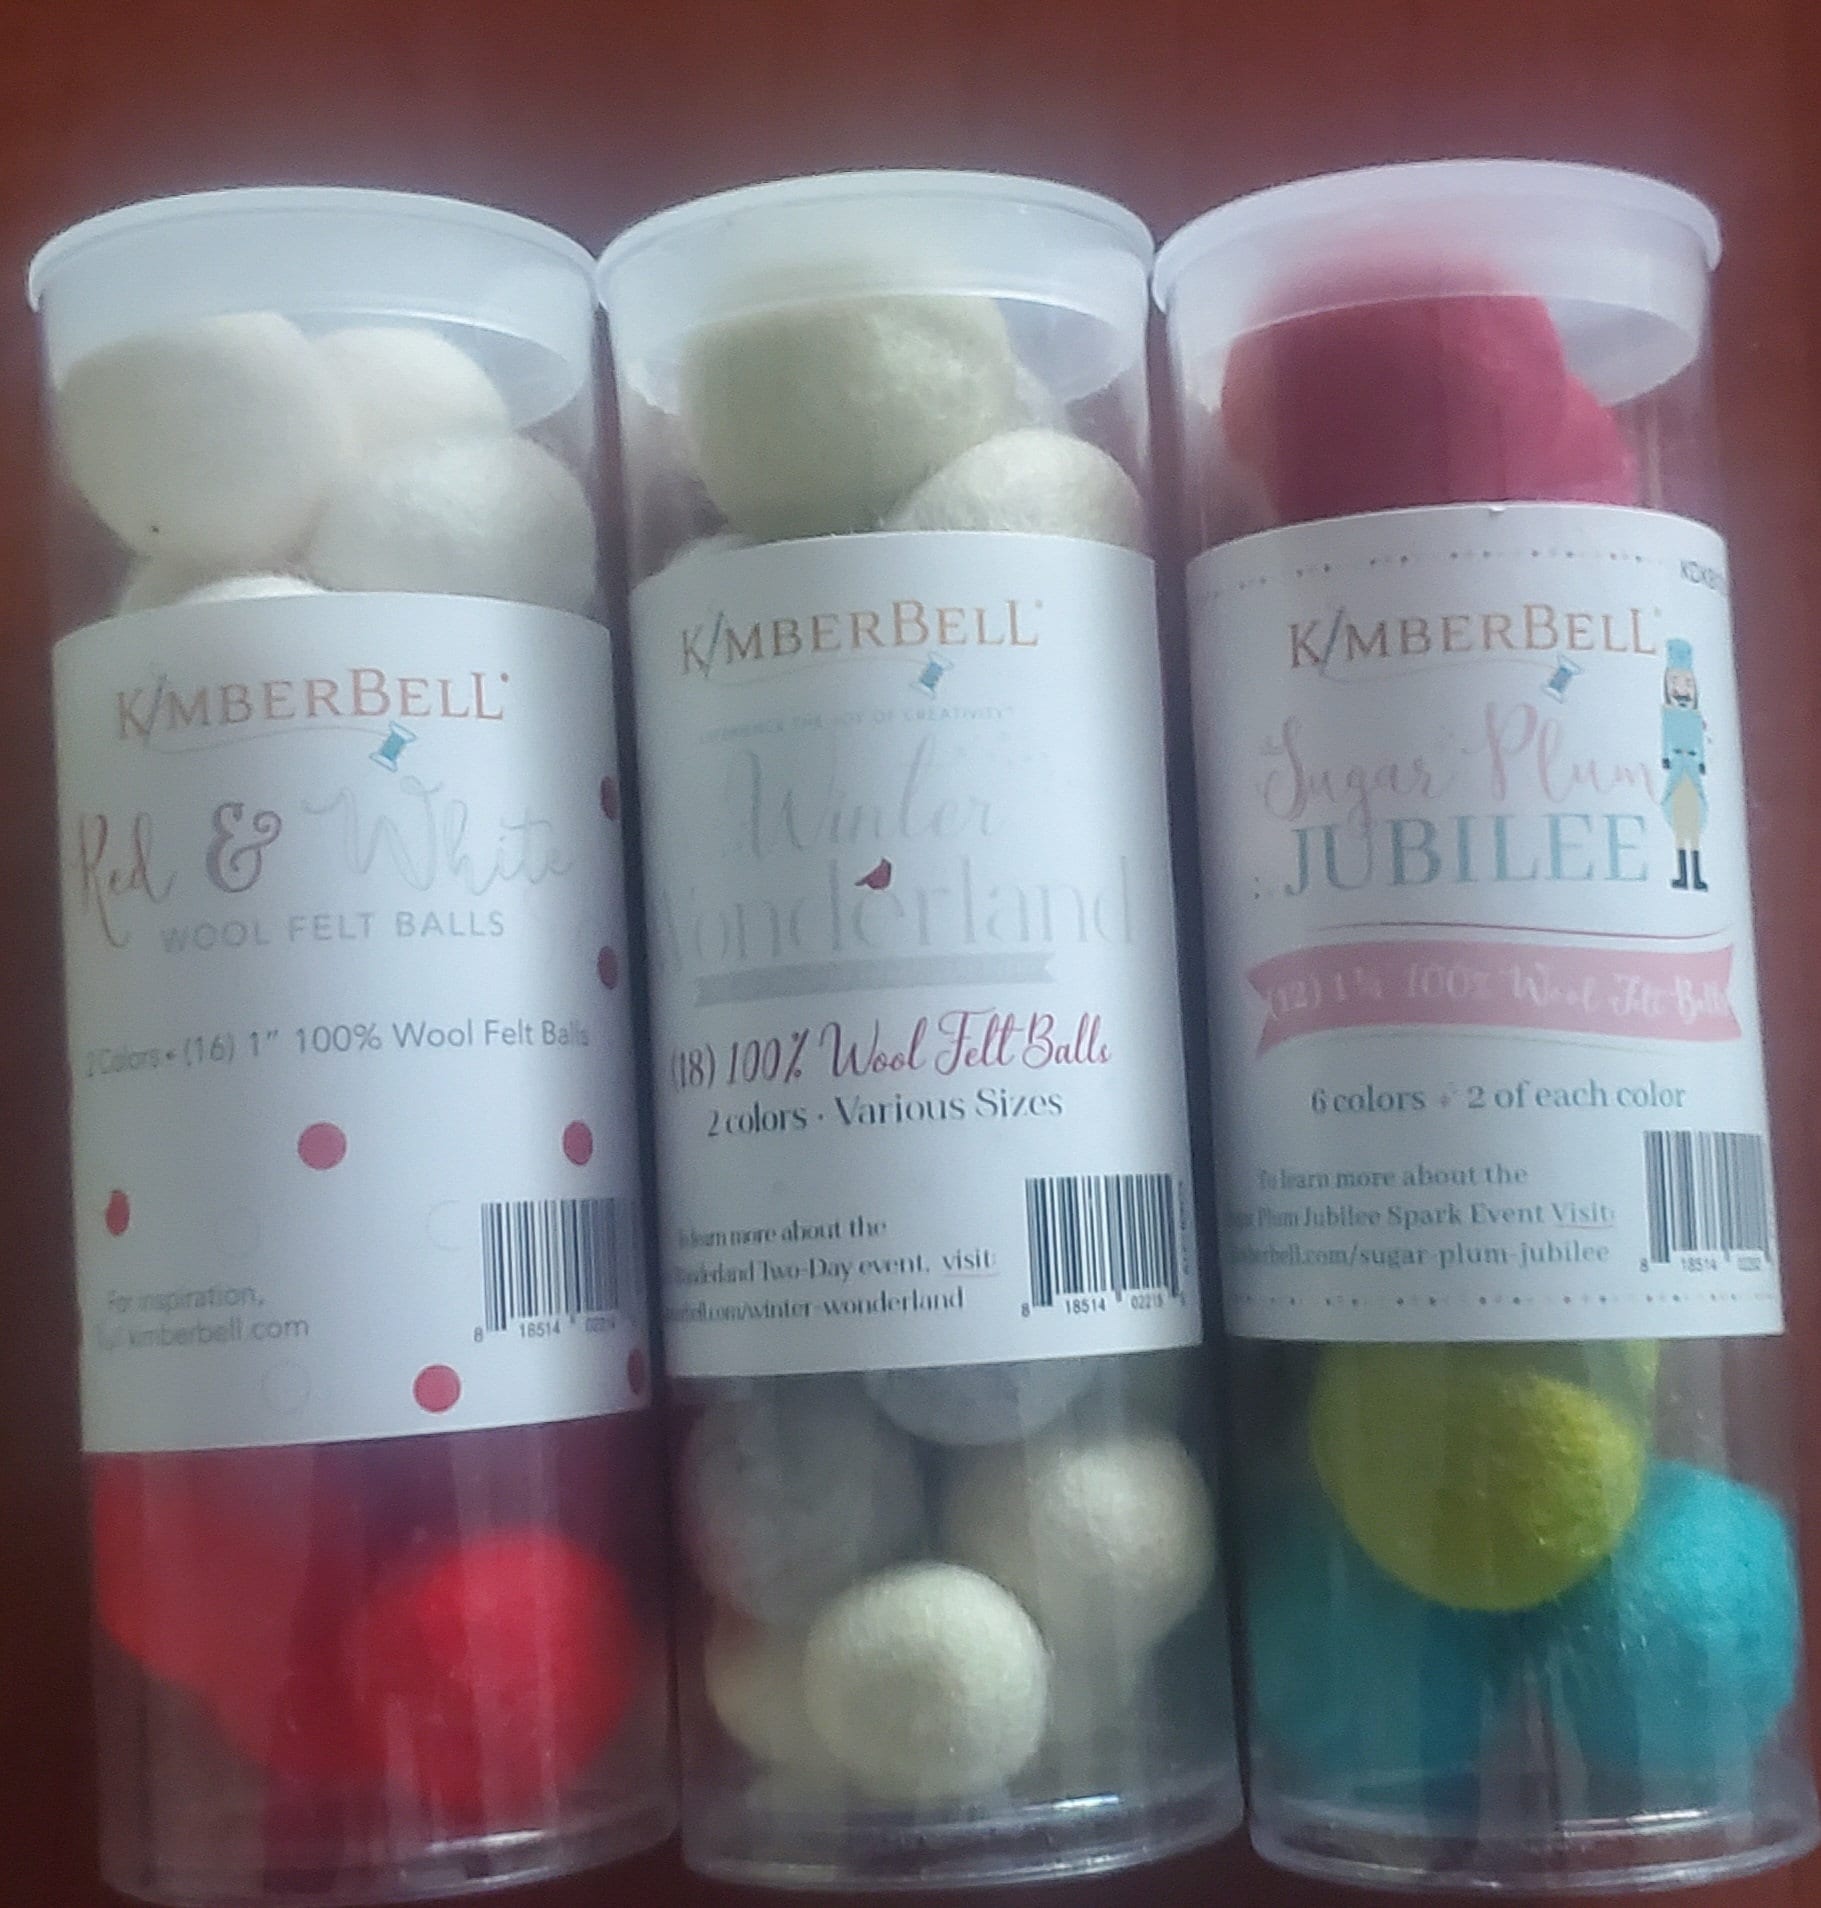 Kimberbell Winter Wonderland Wool Felt Balls